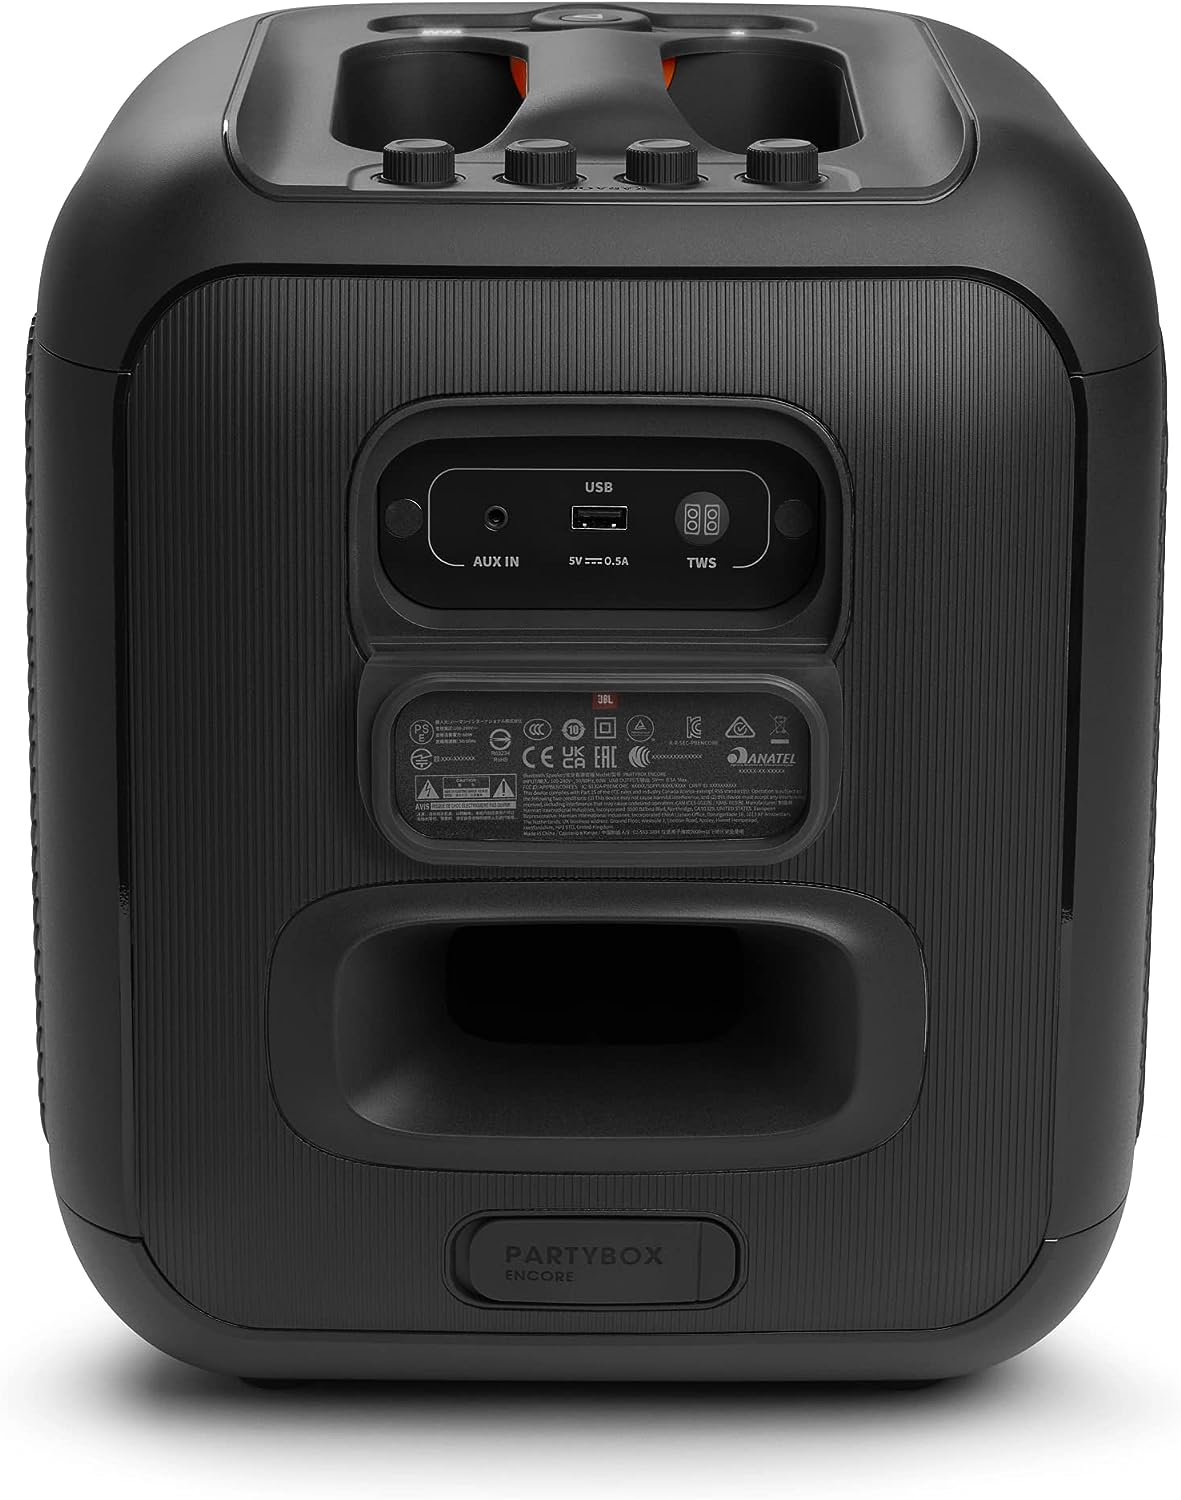 اسپیکر جی بی ال مدلJBL Partybox Encore Portable Party Speaker with Digital Wireless Mic- ارسال ۱۰ الی ۱۵ روز کاری